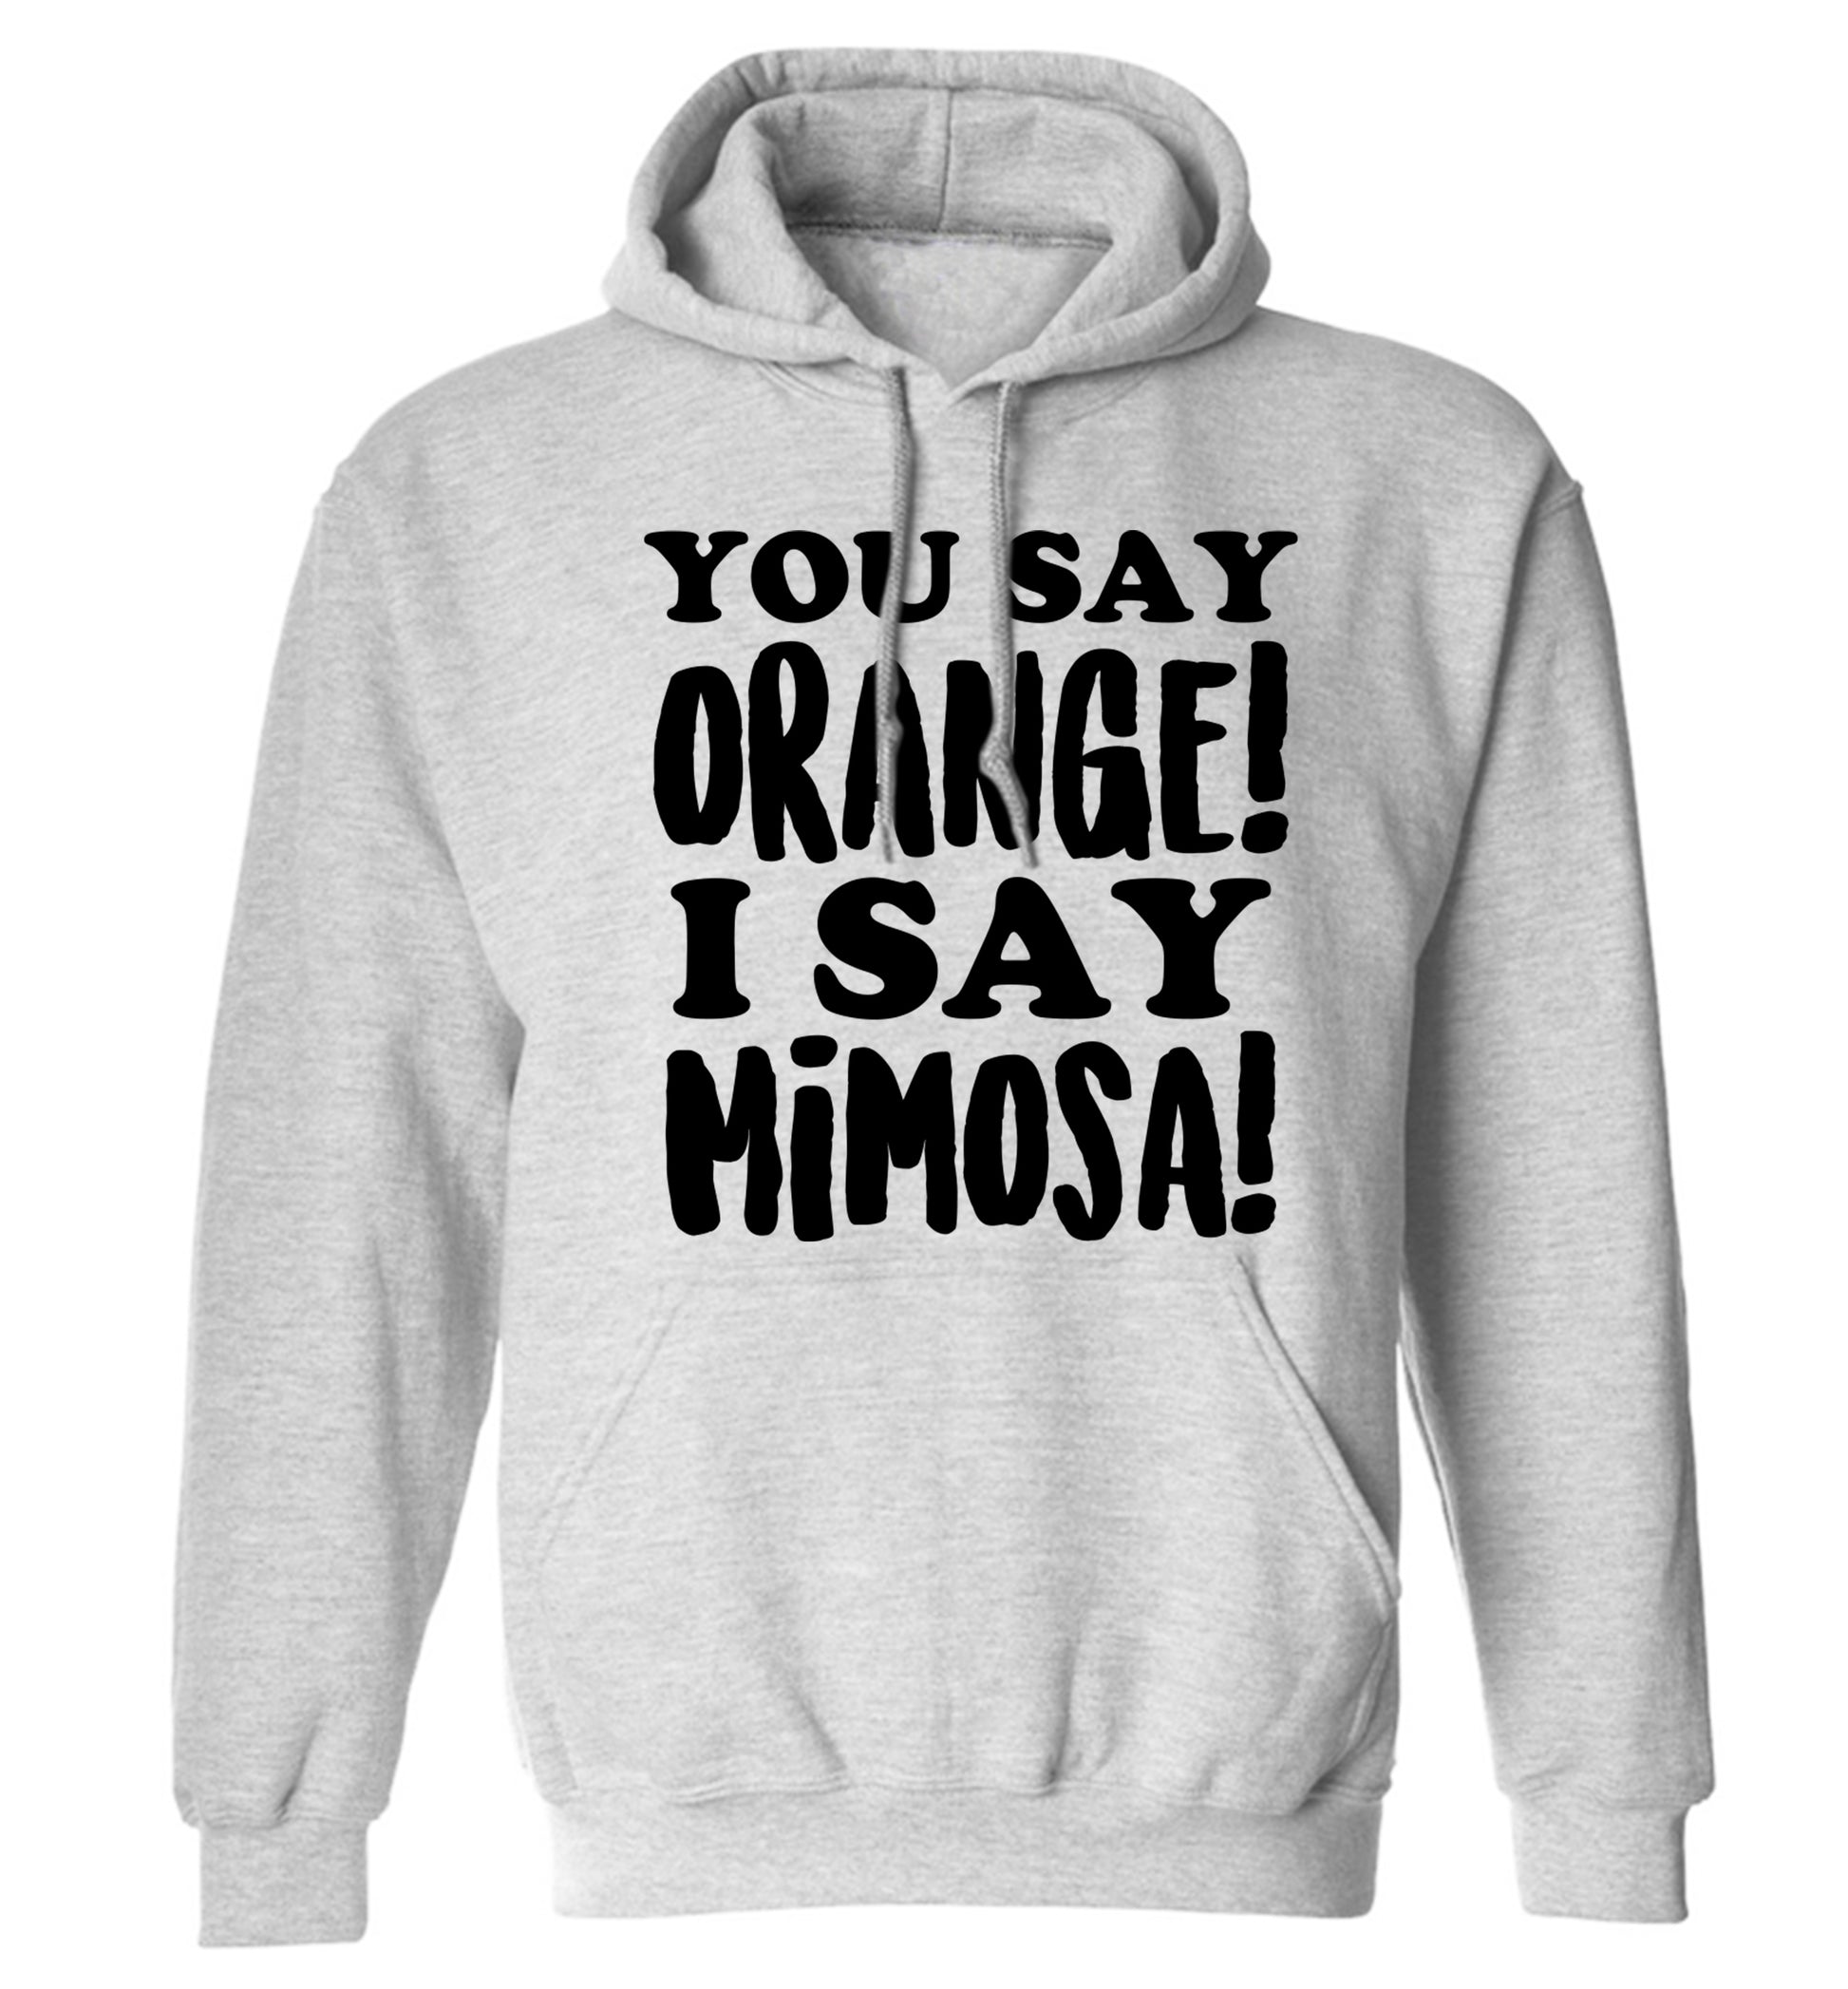 You say orange I say mimosa! adults unisex grey hoodie 2XL